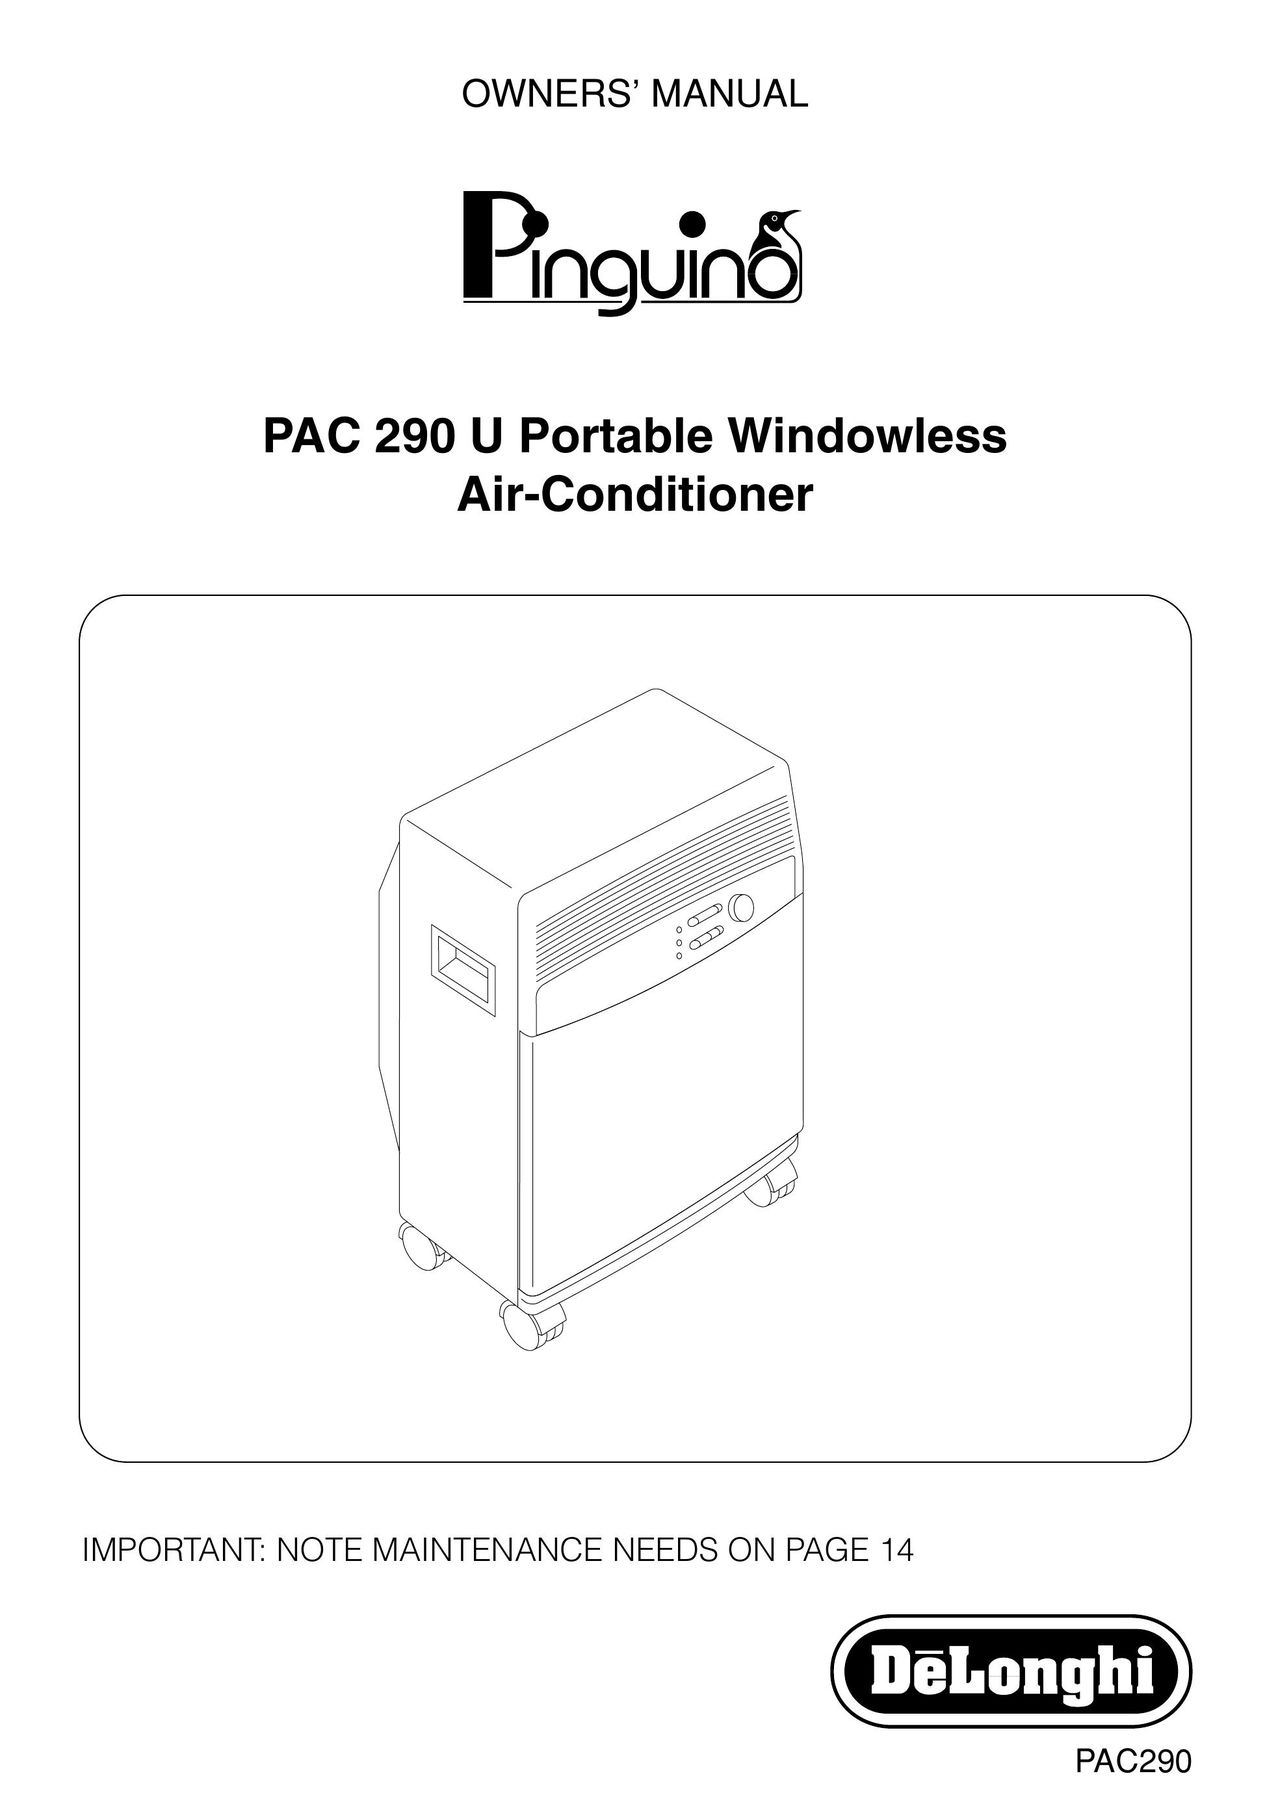 DeLonghi PAC 290 U Air Conditioner User Manual